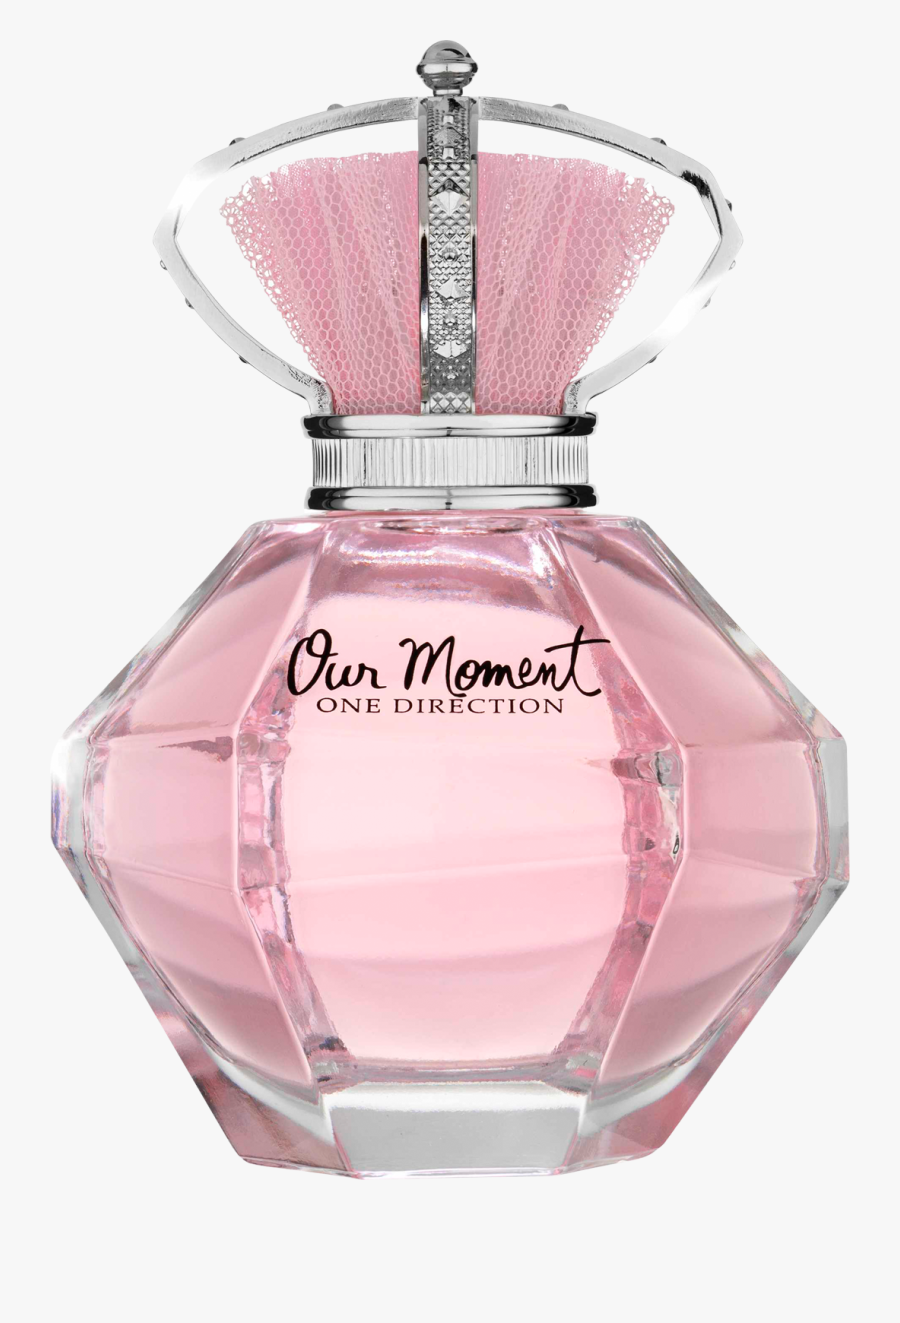 Perufme Clipart Transparent Background - Our Moment One Direction, Transparent Clipart